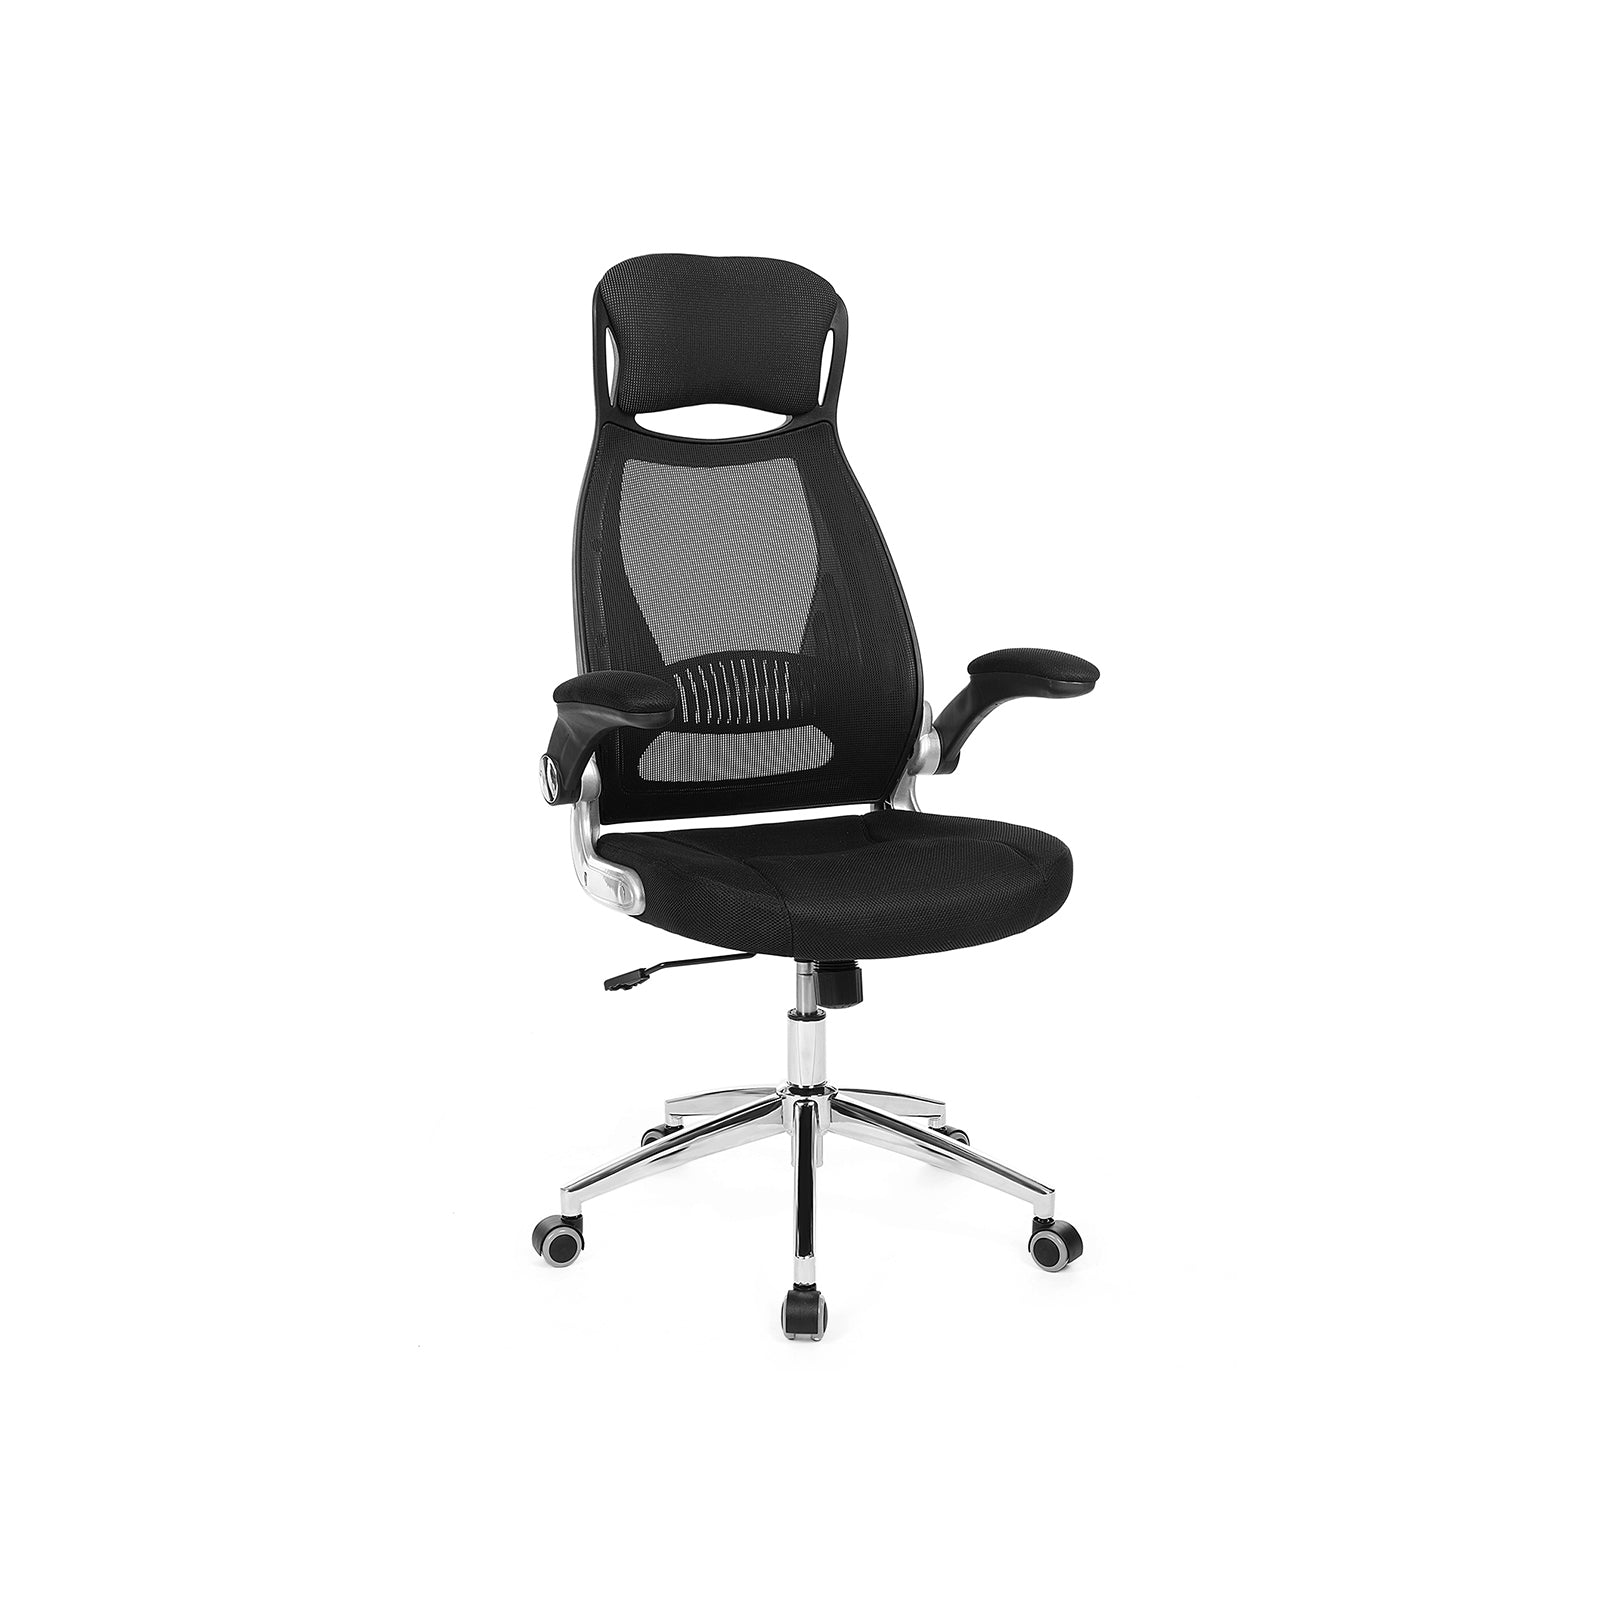 Image of SONGMICS Office Chair High Back, Mesh Office Chair, Swivel Desk Chair, Flip up Armrests, OBN86BUK